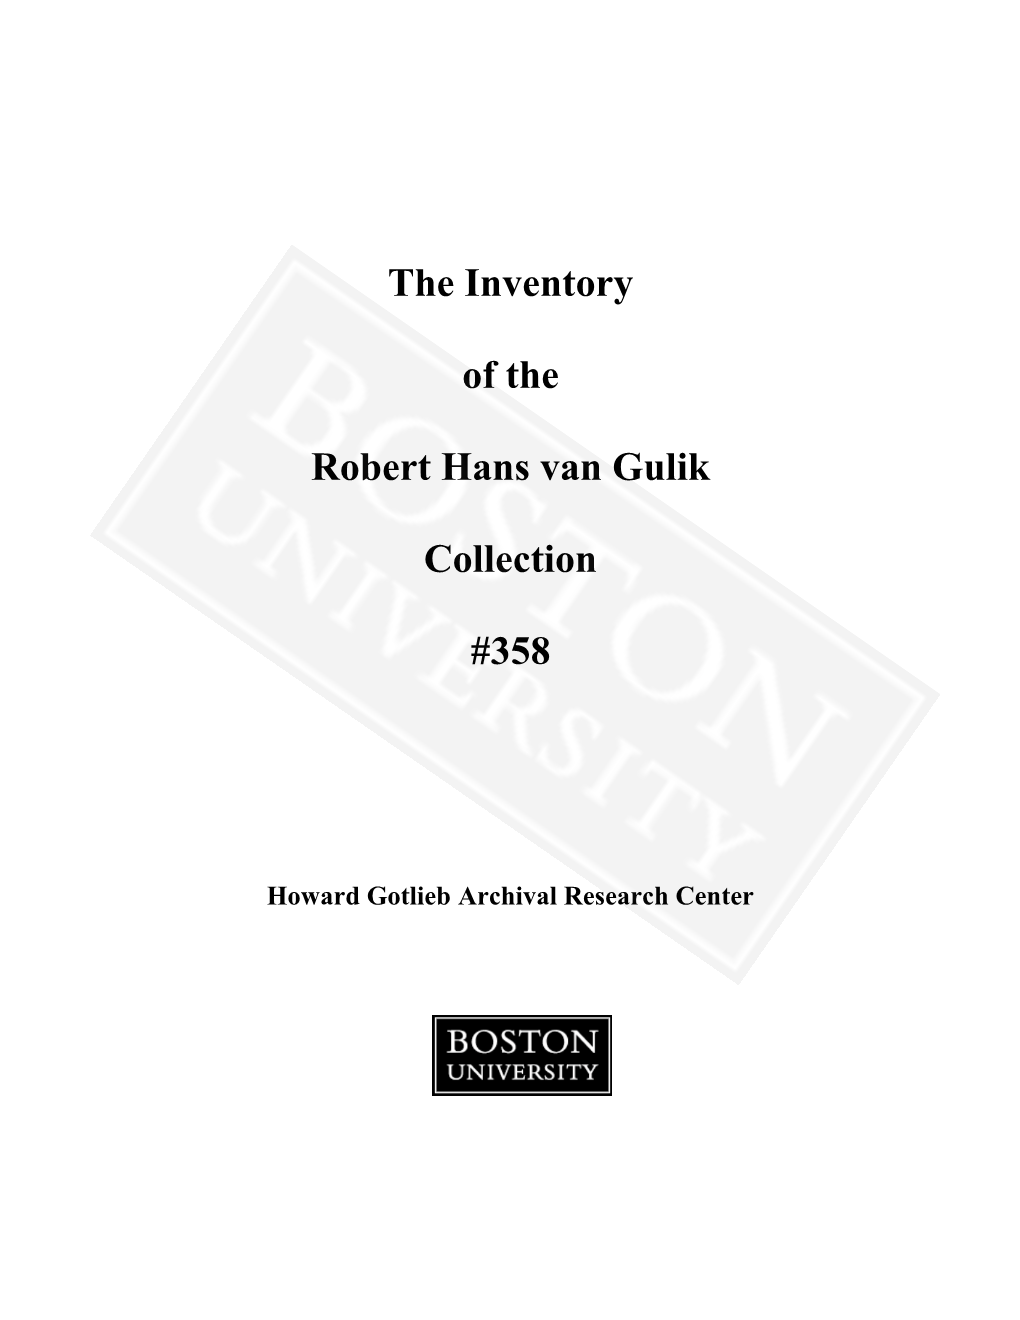 The Inventory of the Robert Hans Van Gulik Collection #358